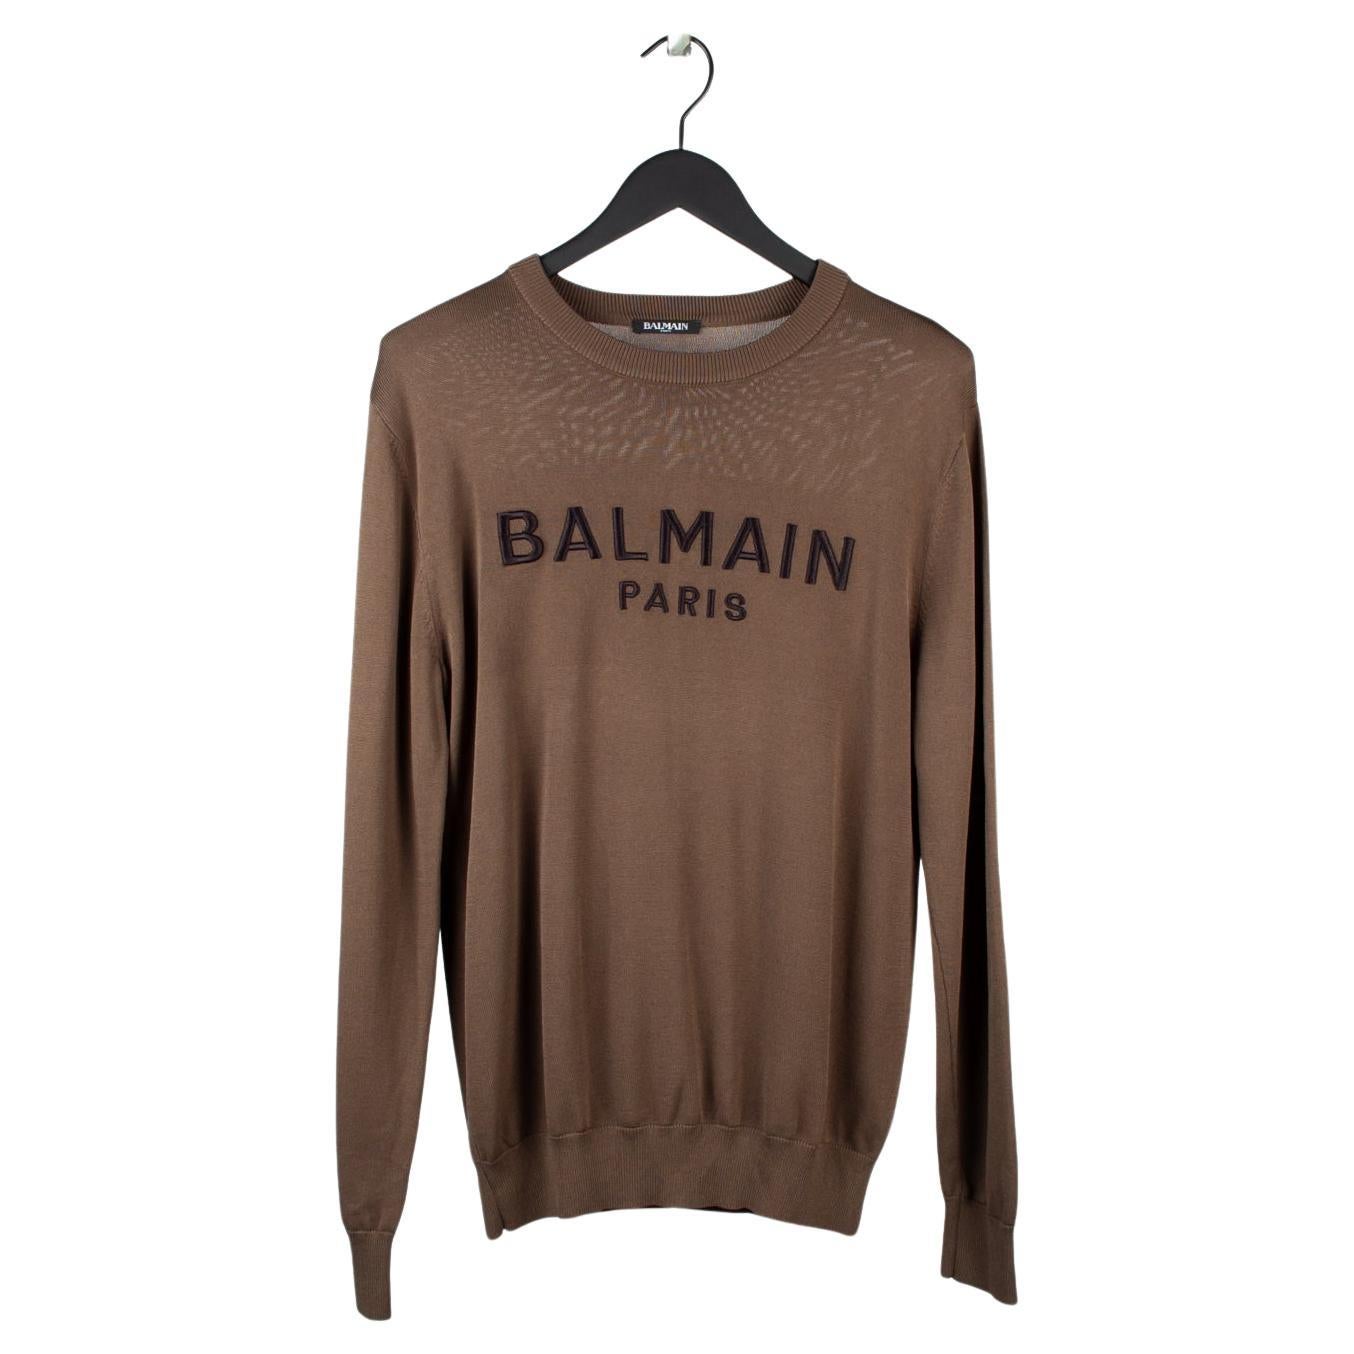 Balmain Men Sweater Crew Neck Size S/M, S606 For Sale